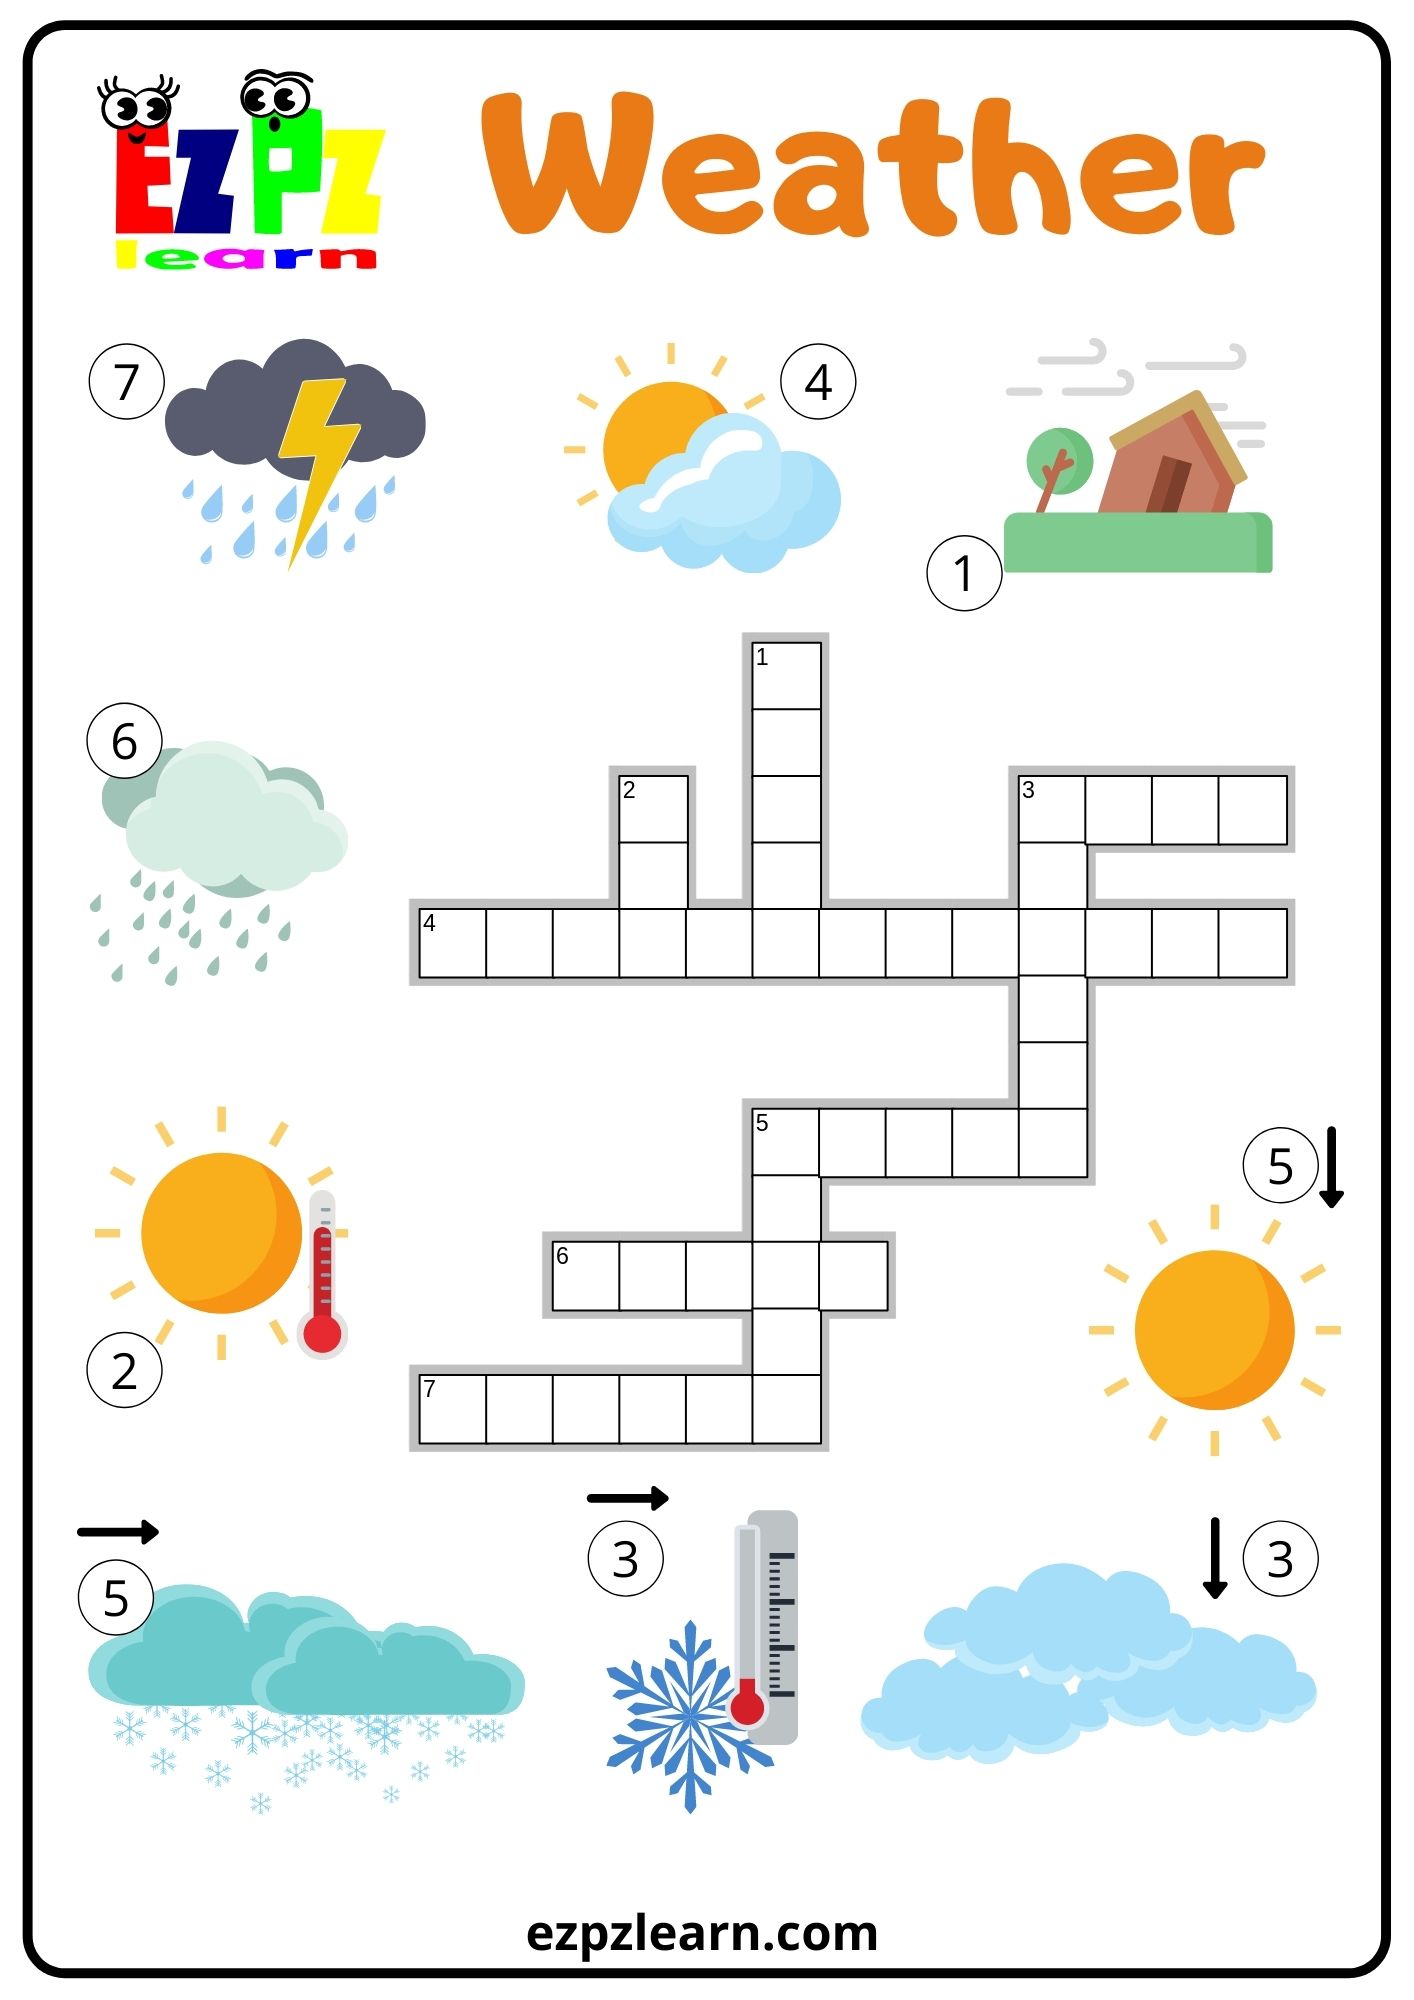 Weather Crossword Ezpzlearn com